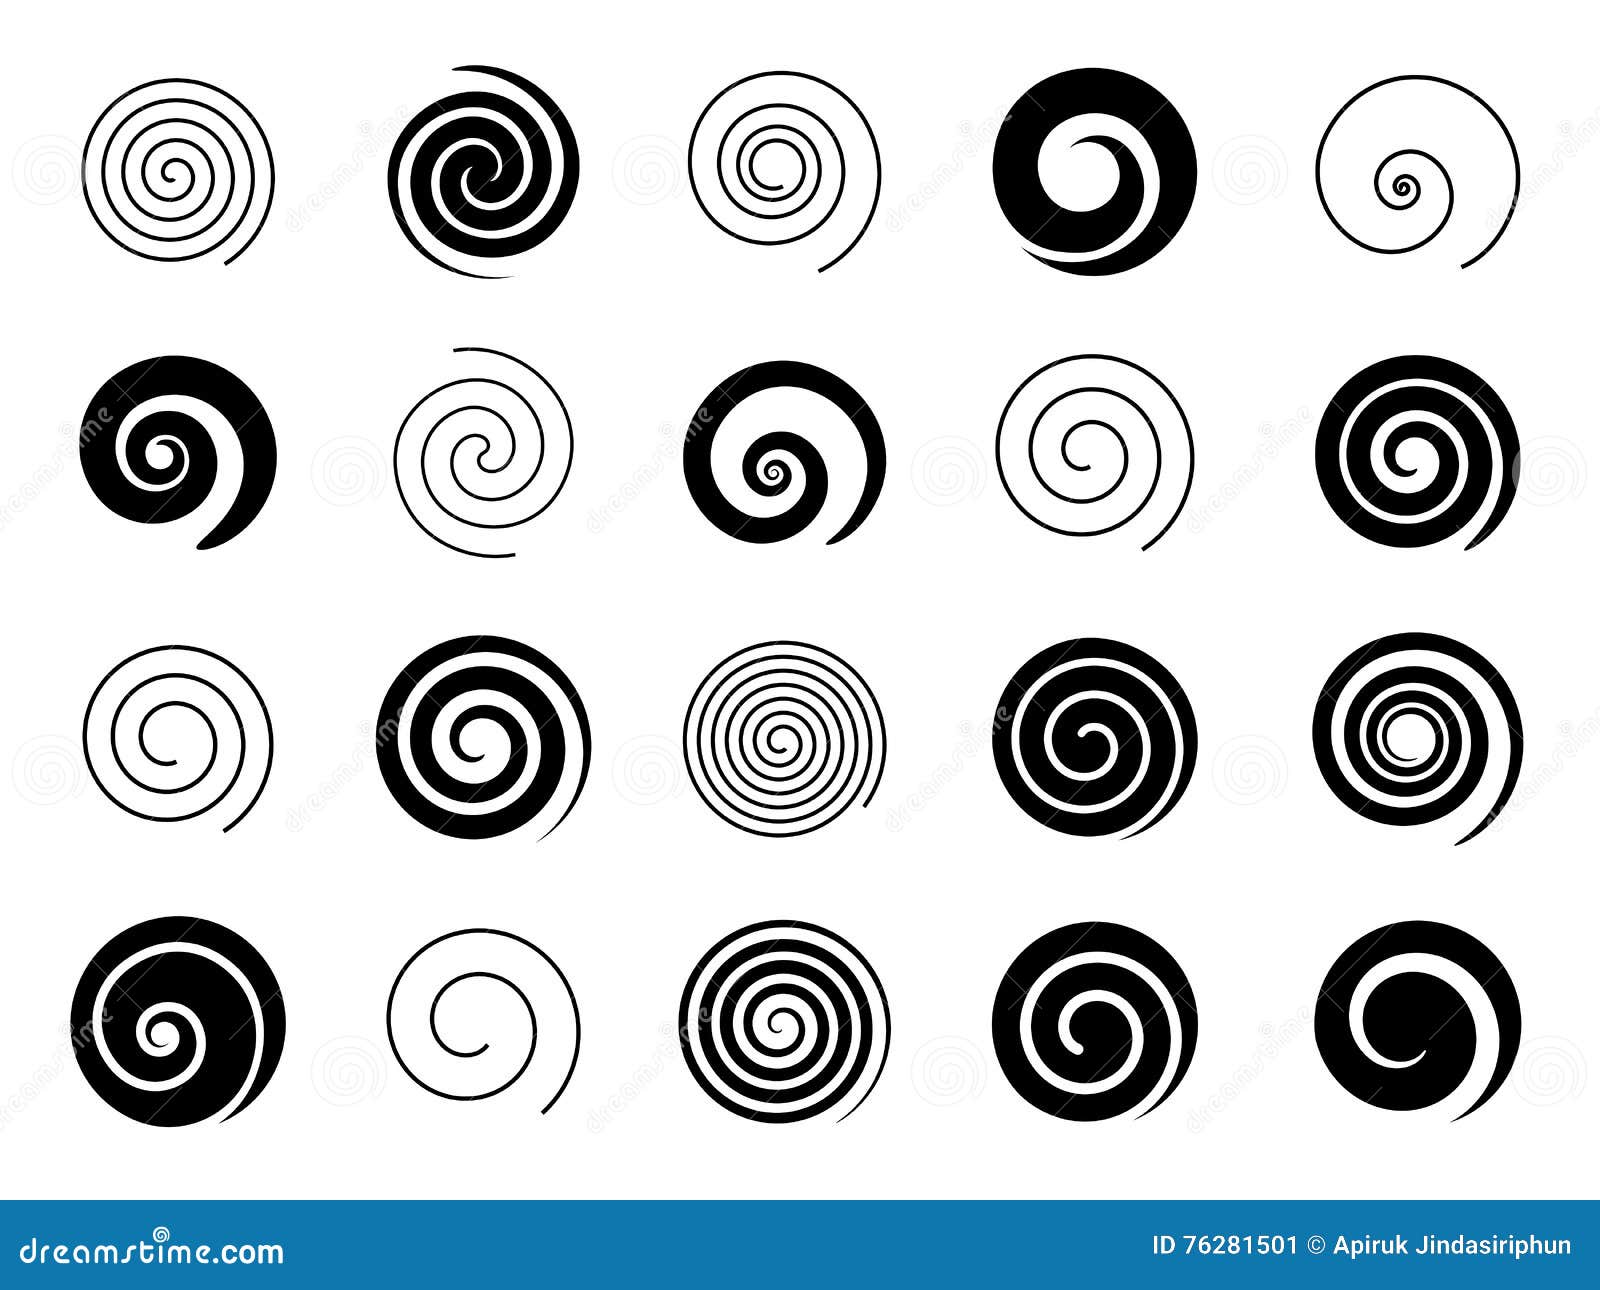 set of spiral s